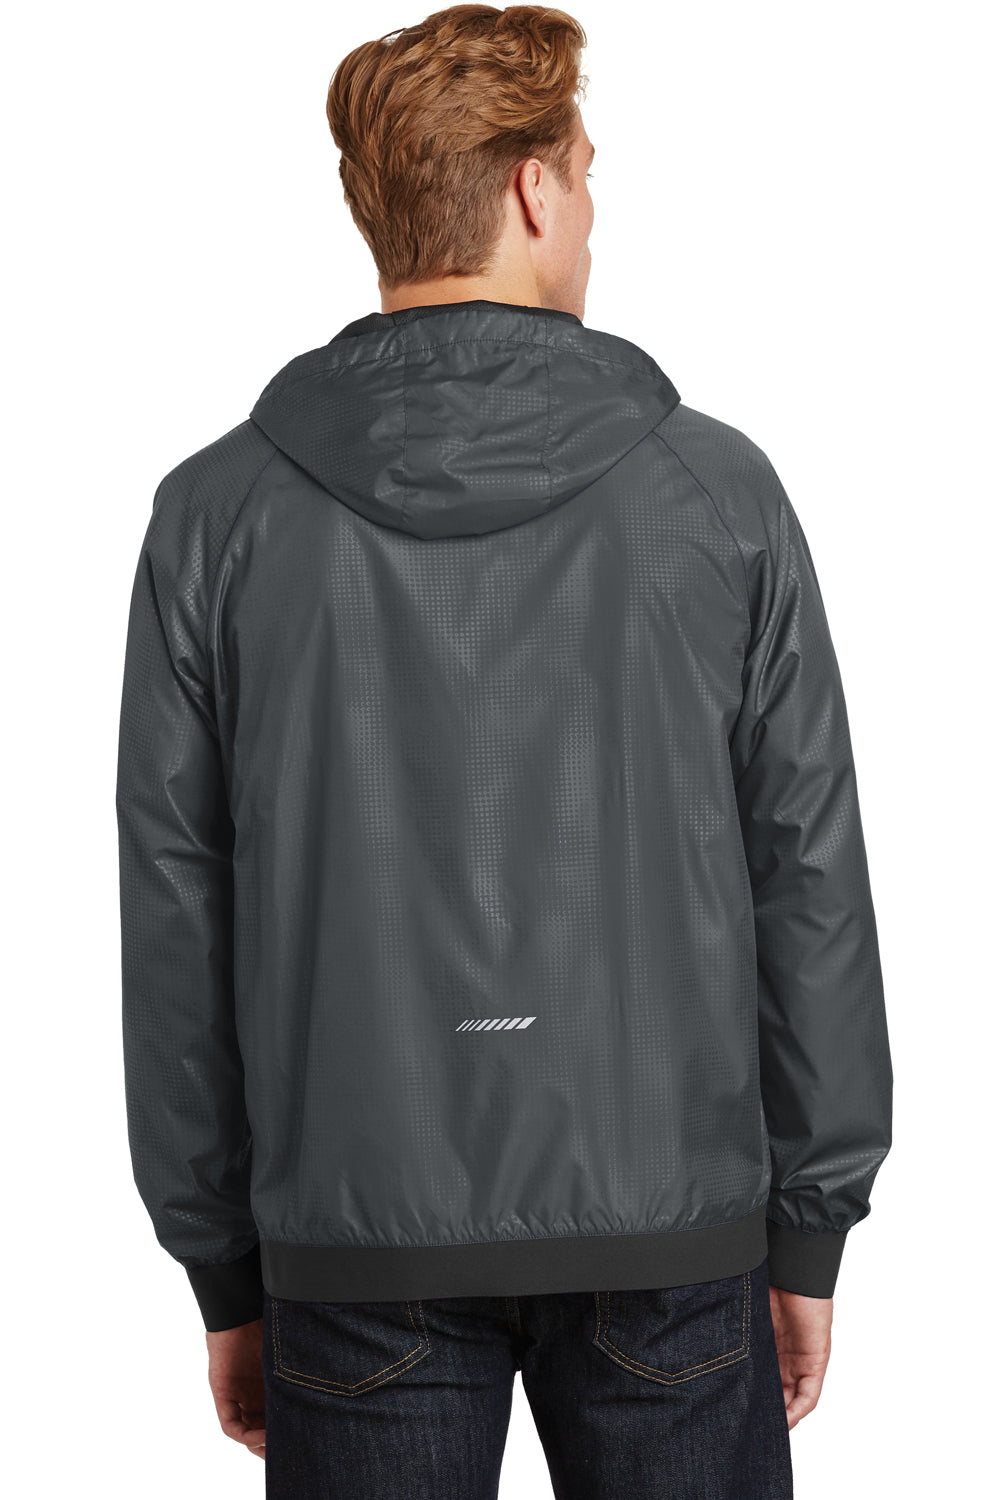 Sport-Tek JST53 Mens Wind & Water Resistant Full Zip Hooded Jacket Graphite Grey Back